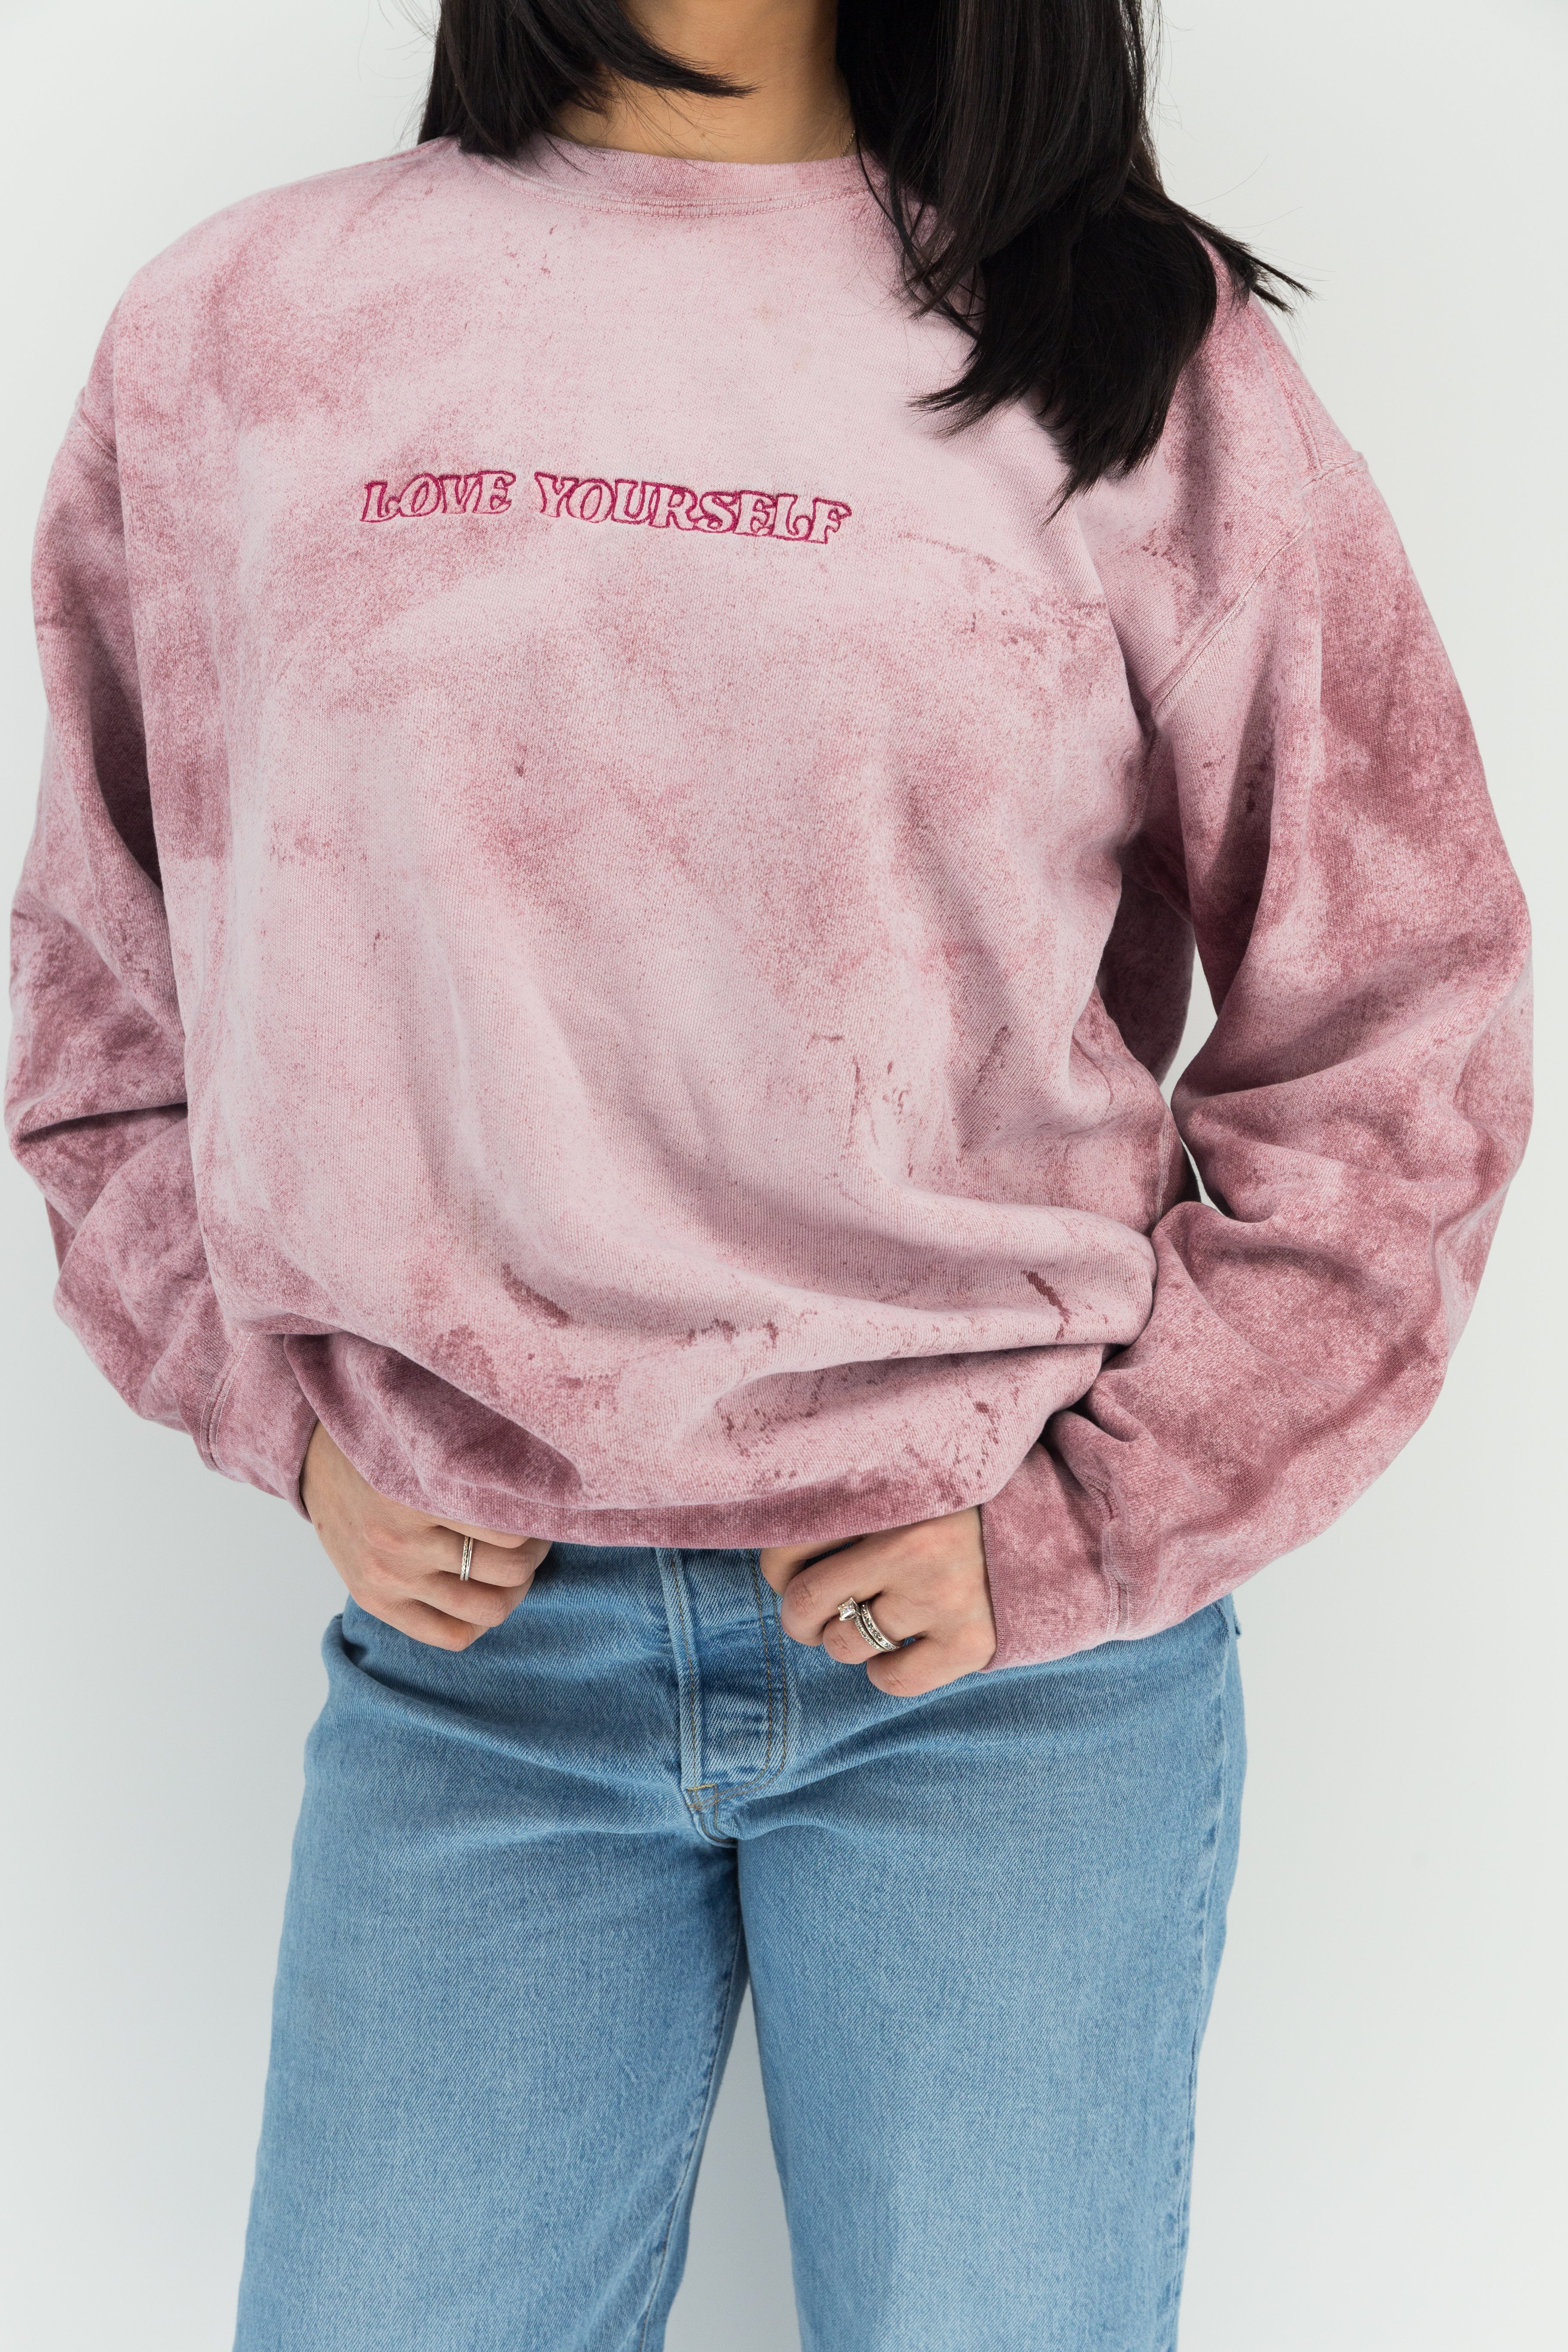 Love Yourself -  Clay Pink Embroidered Crewneck Sweatshirt